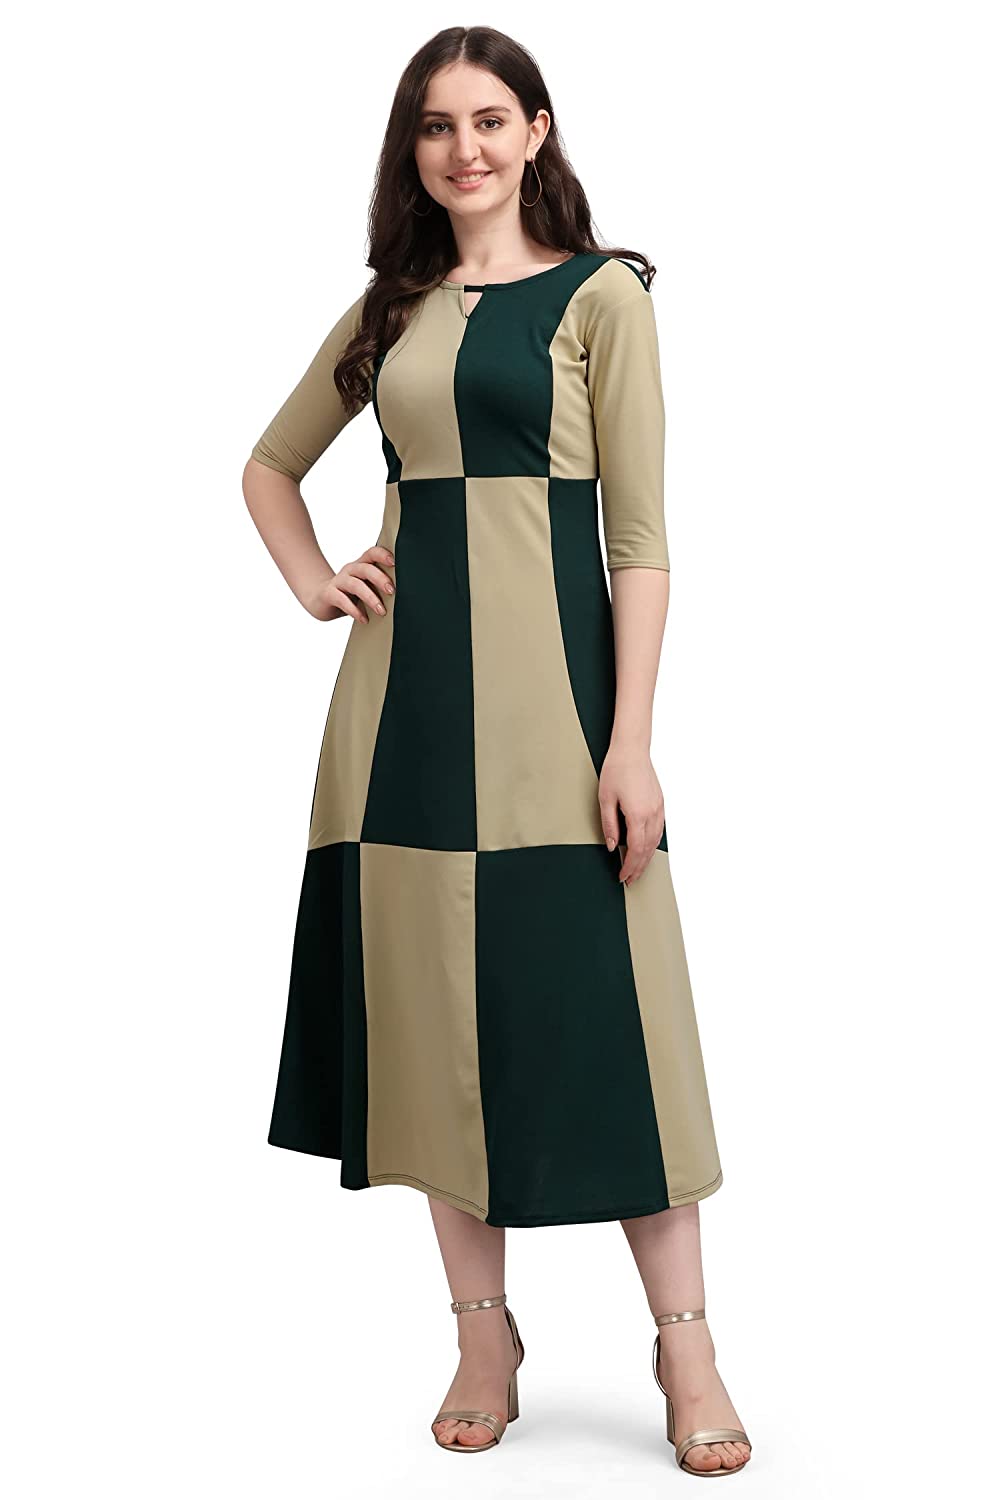 PURVAJA Women's Maxi Dress -  Dresses in Sri Lanka from Arcade Online Shopping - Just Rs. 4699!